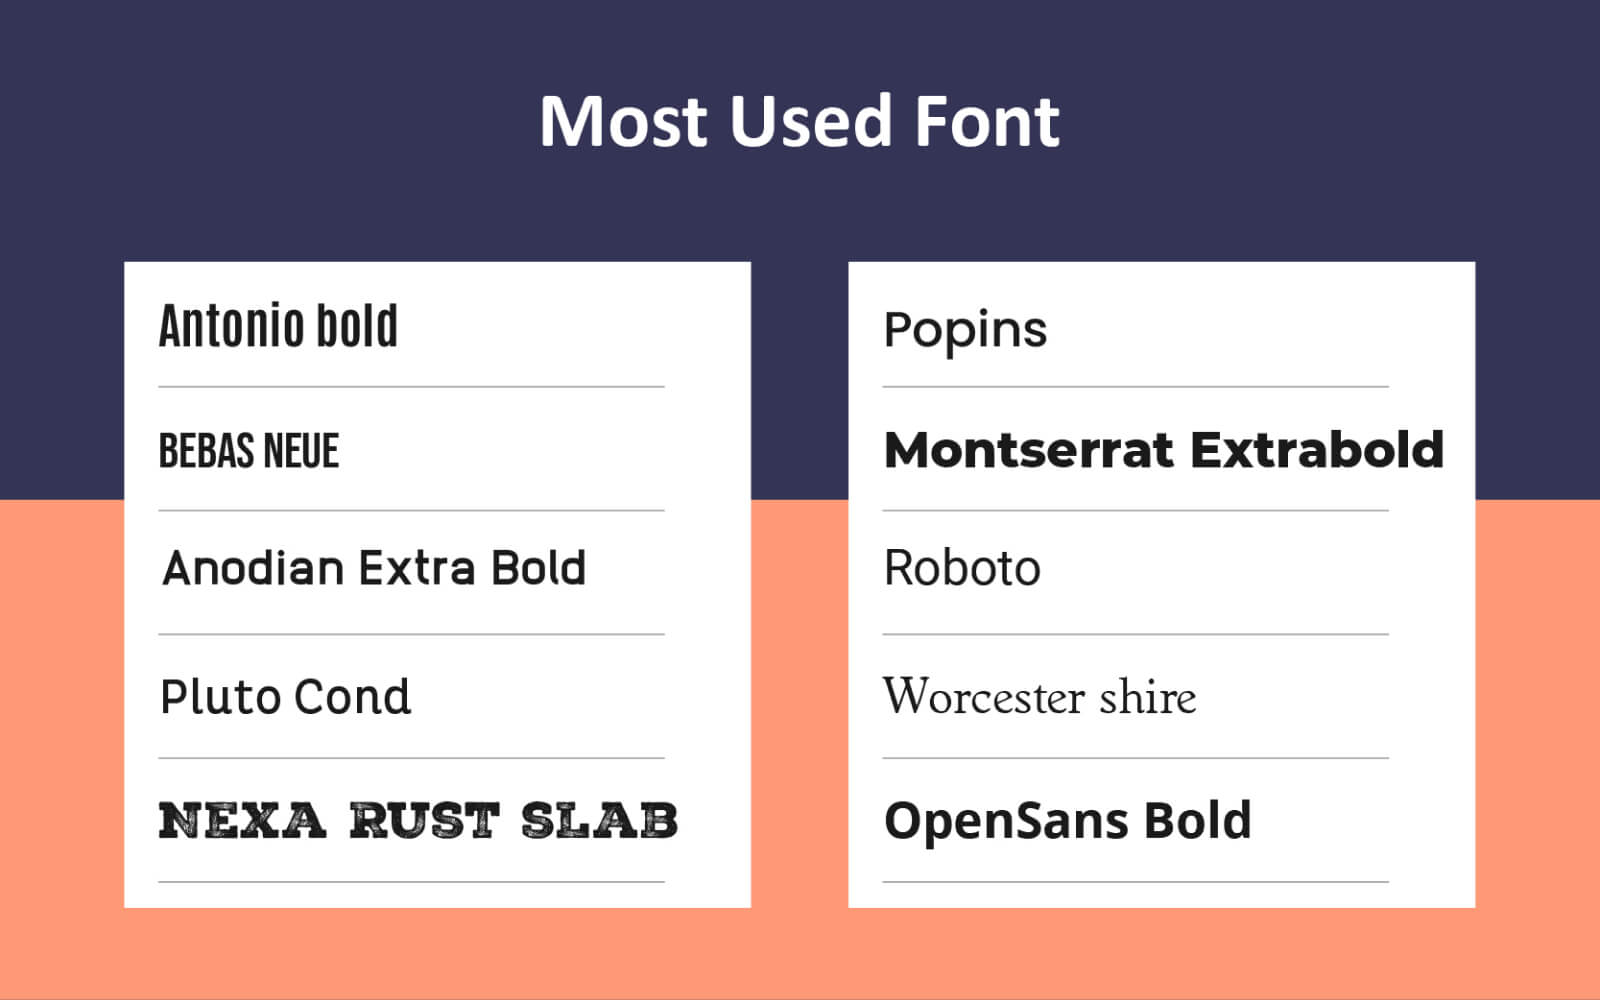 most used font for digital menu boards